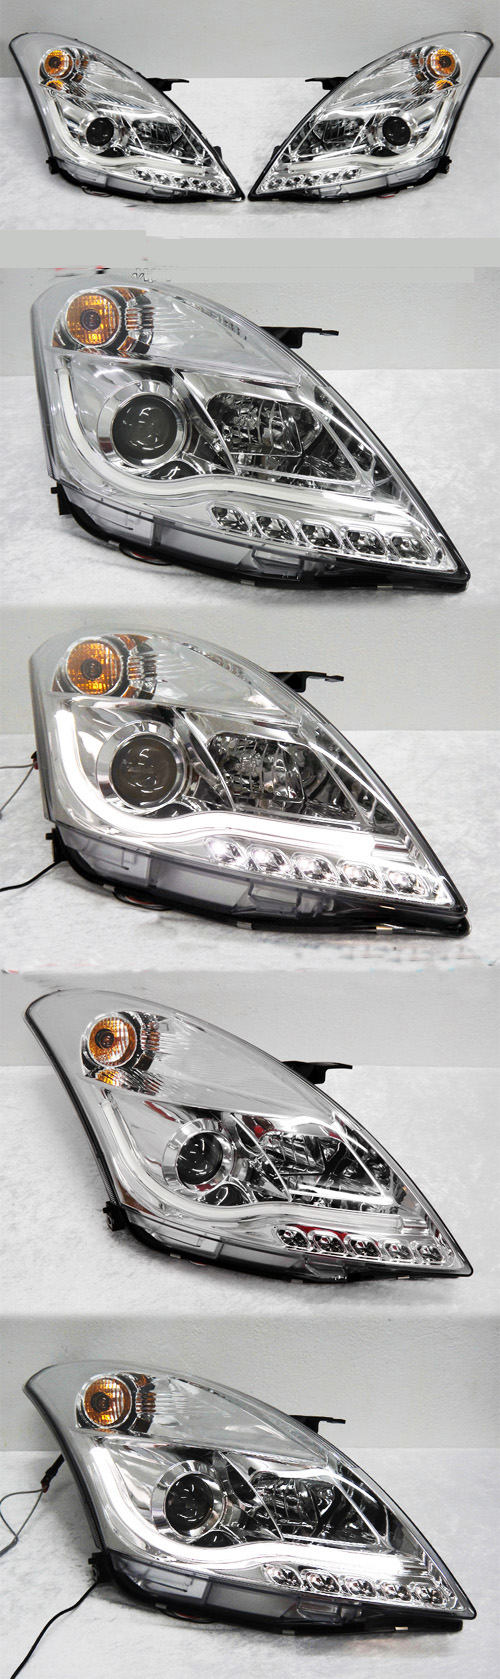 Đèn pha LED Suzuki Swift 2012 mẫu Sonar chóa trắng